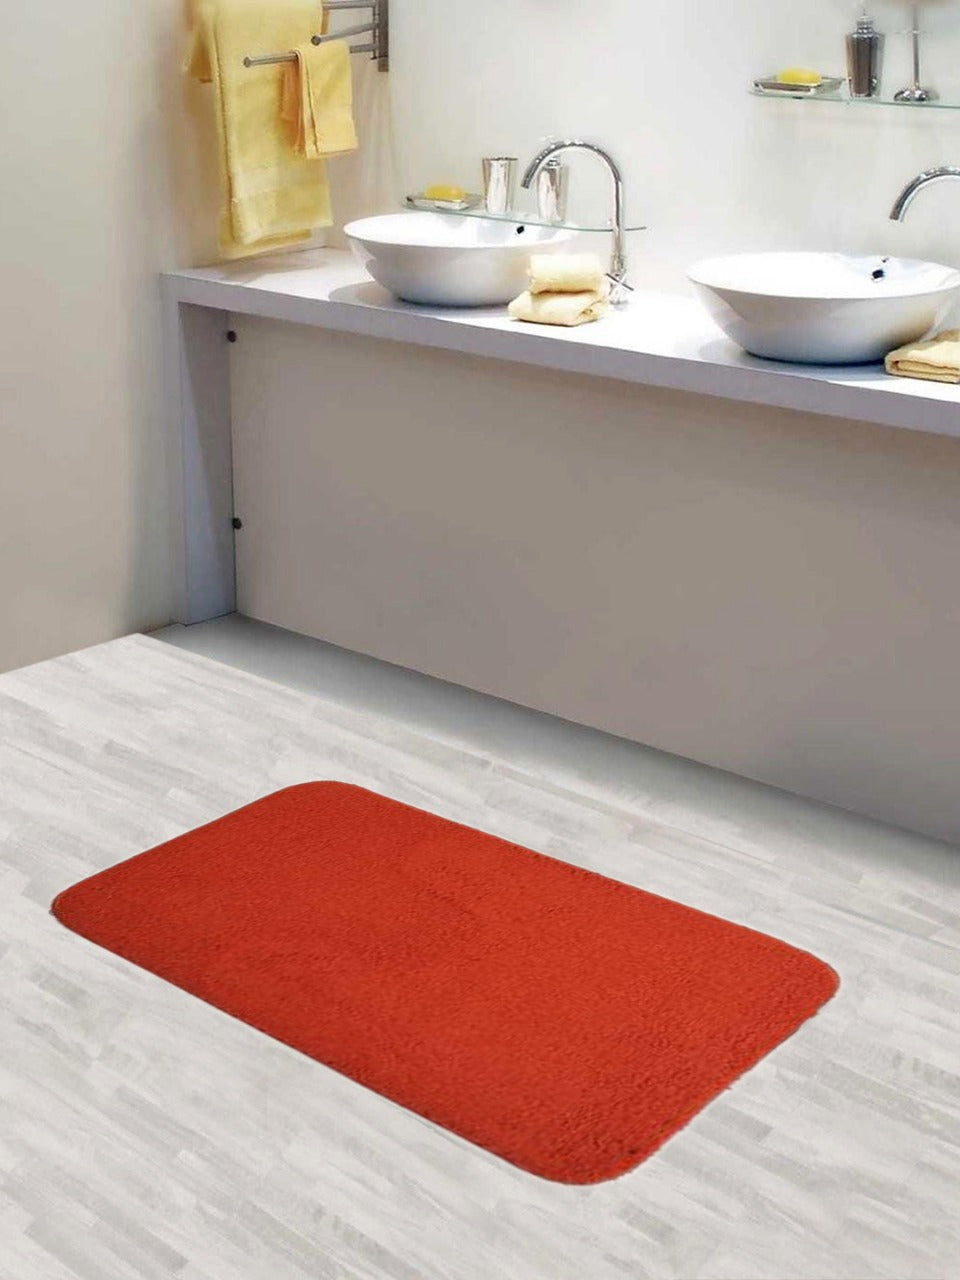 Lushomes Bathroom Mat, floor mats for home, anti slip mat, non slip mat 1800 GSM Floor Mat with High Pile Microfiber, anti skid mat for bathroom floor (12 x 18 Inch, Single Pc, Maroon)